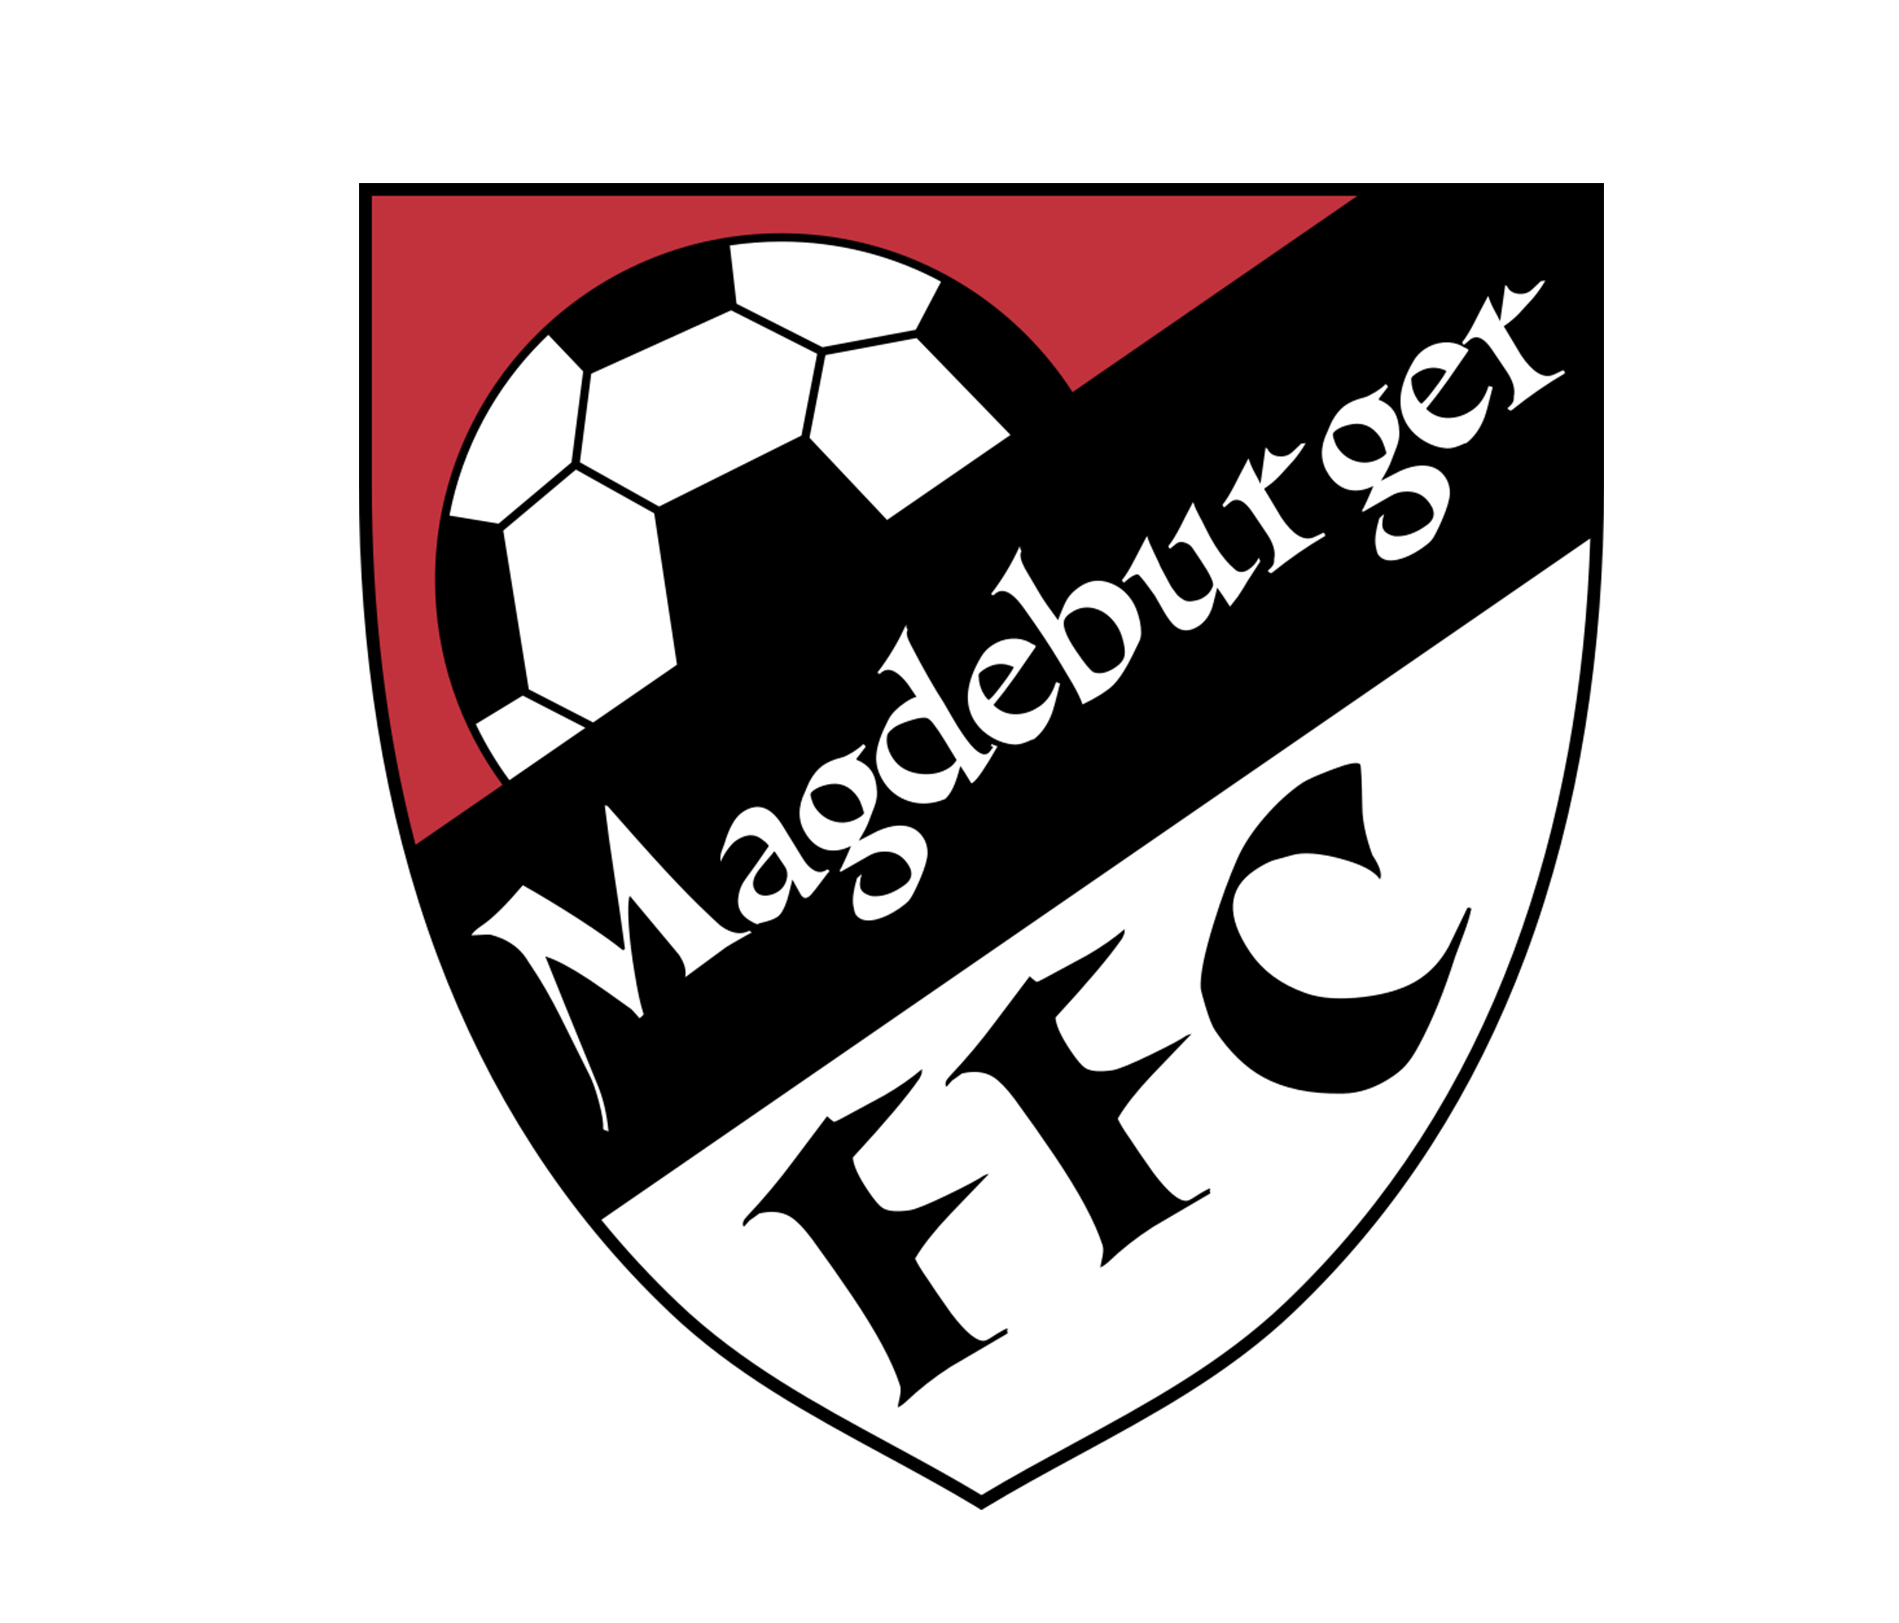 MFFC Magdeburger Frauen Fussballclub